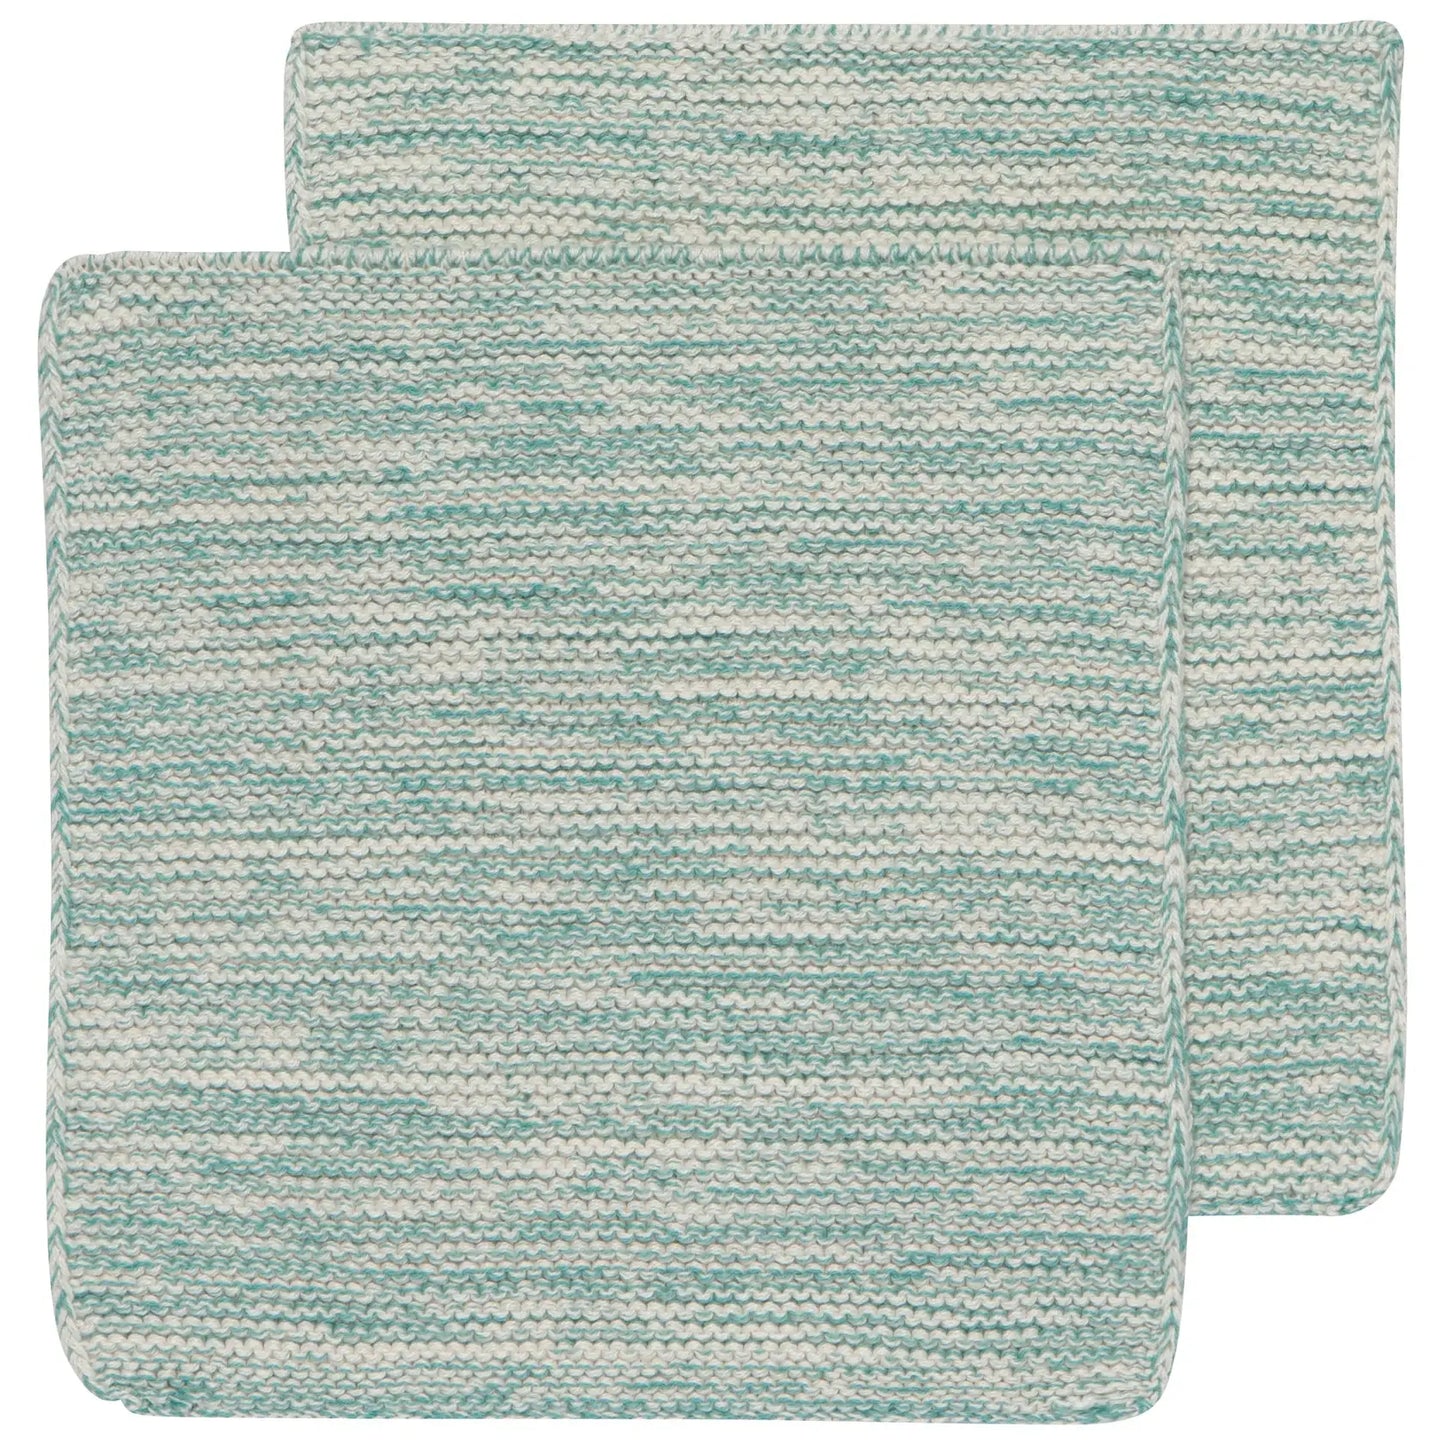 Lagoon Knit Dishcloths Set of 2